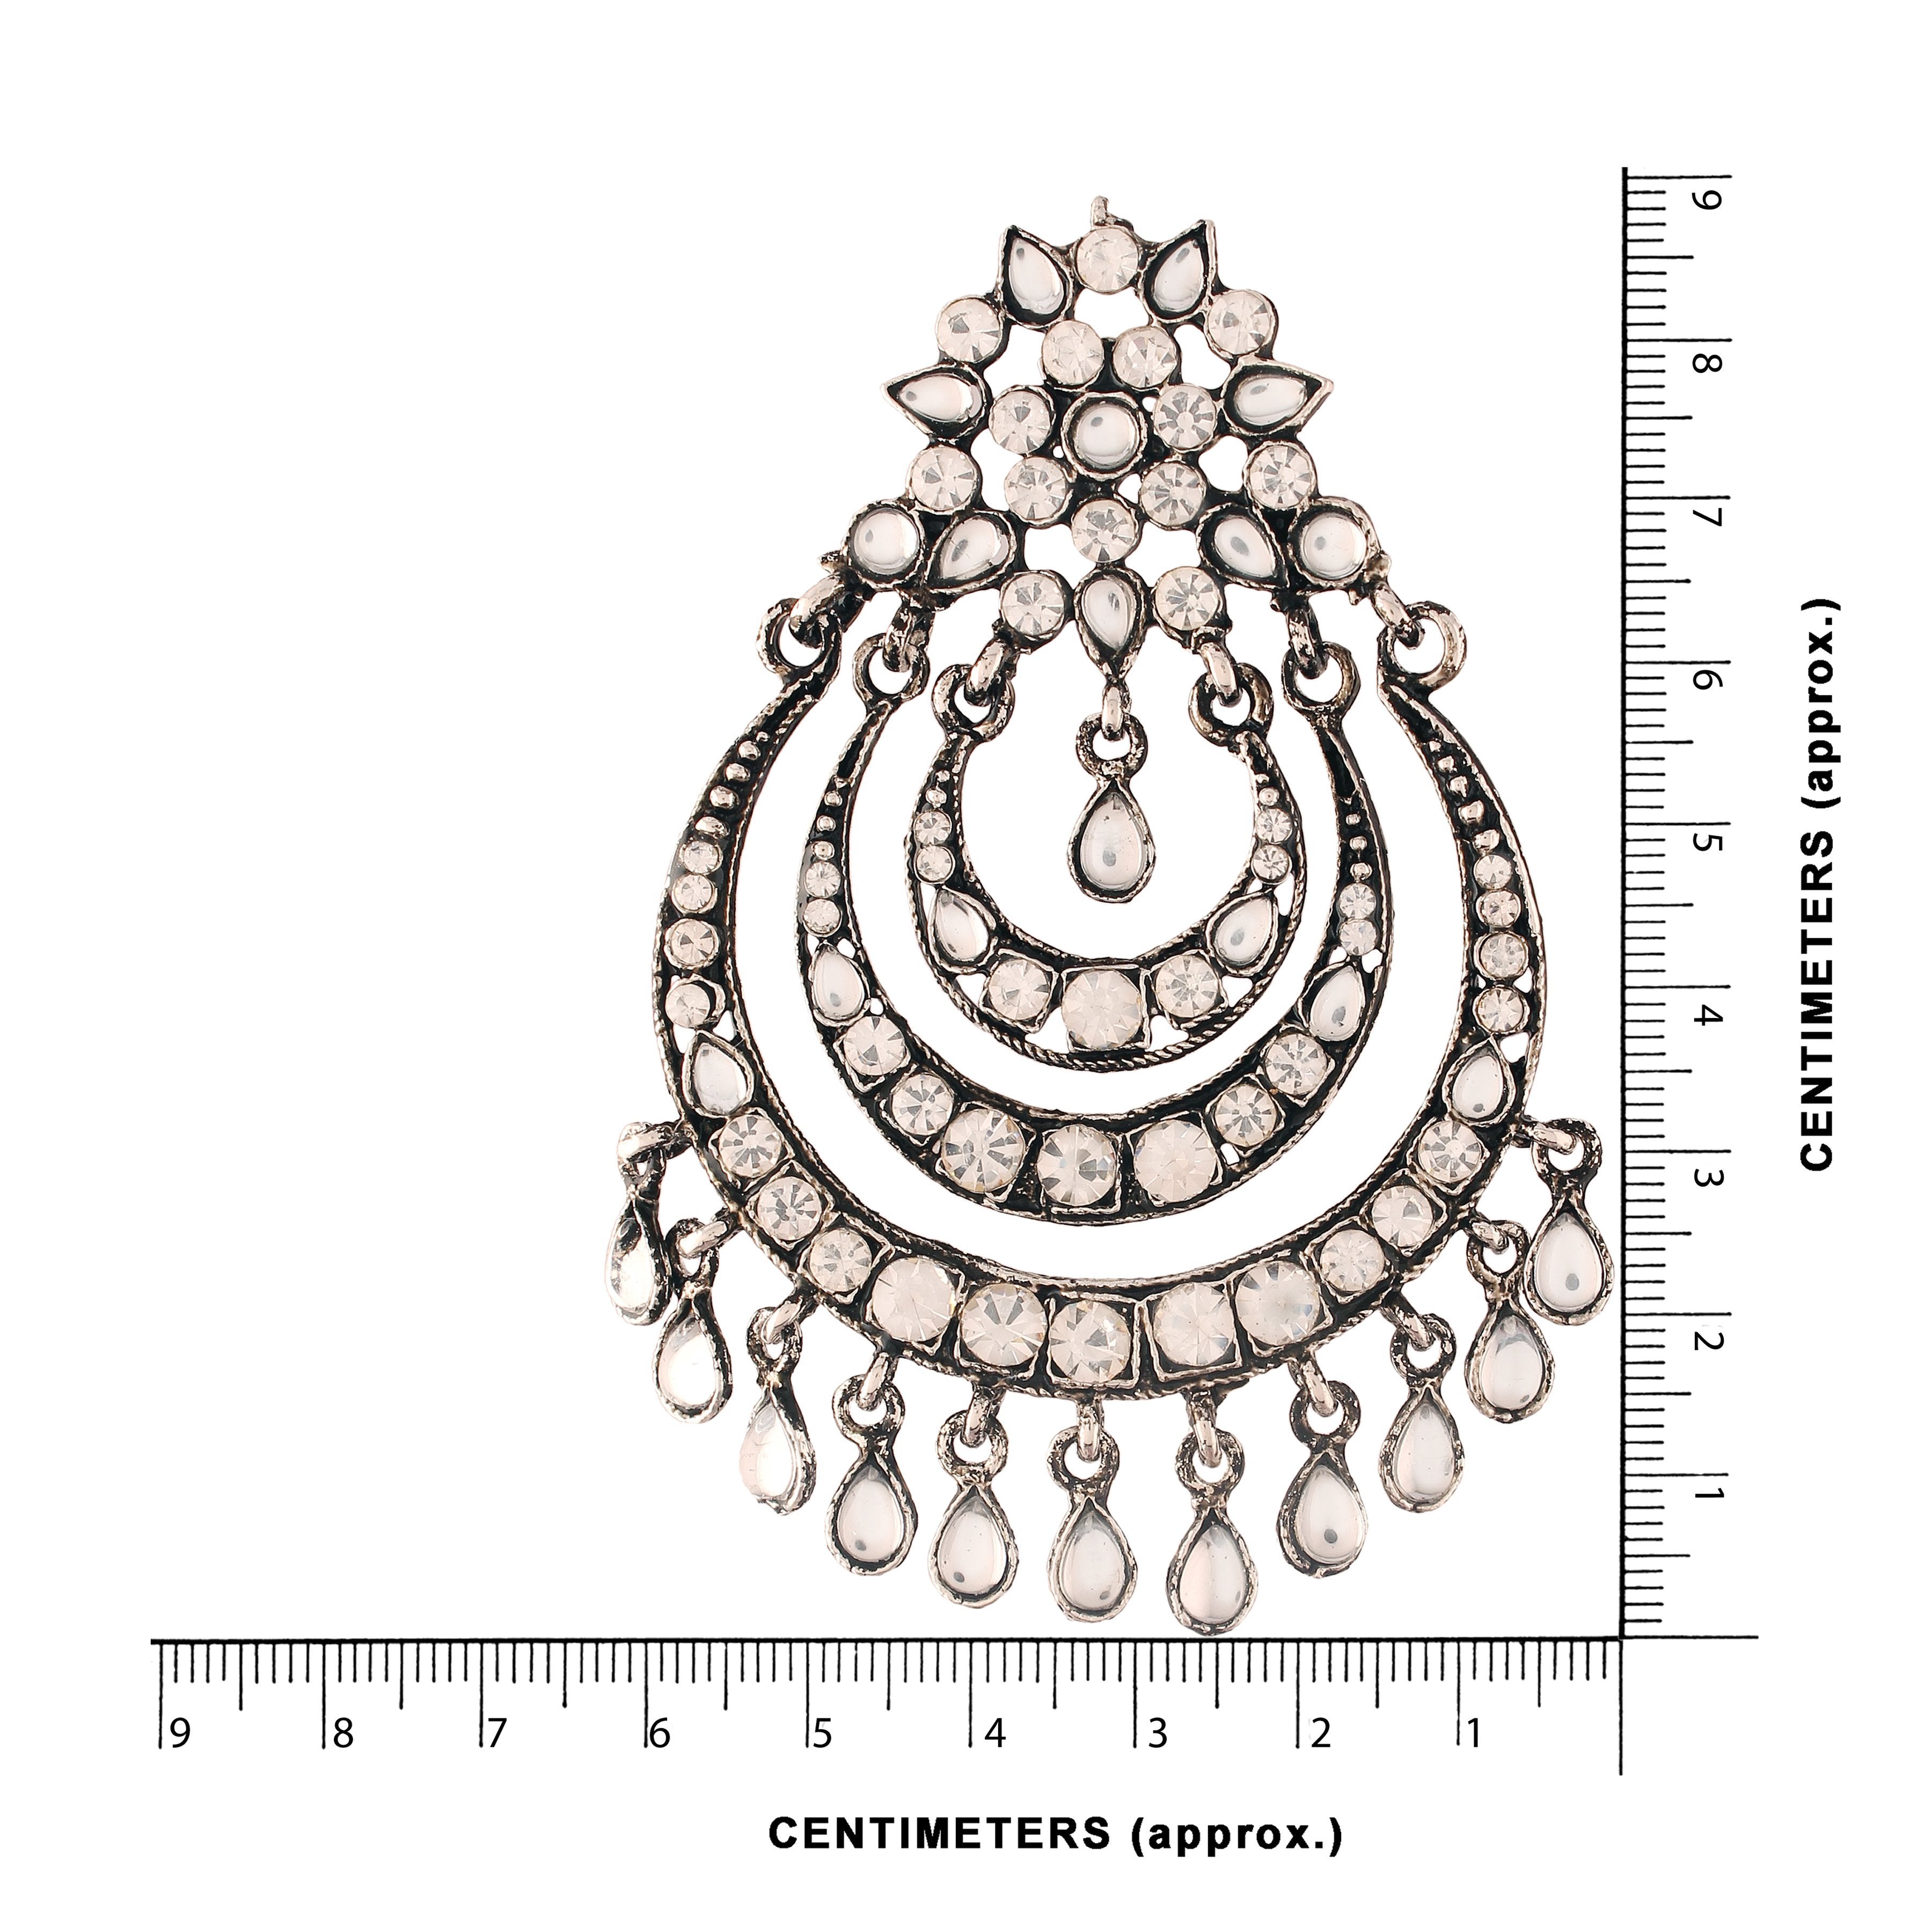 Women's  Silver Oxidised Traditional Stone Studded Chandbali Earrings - i jewels